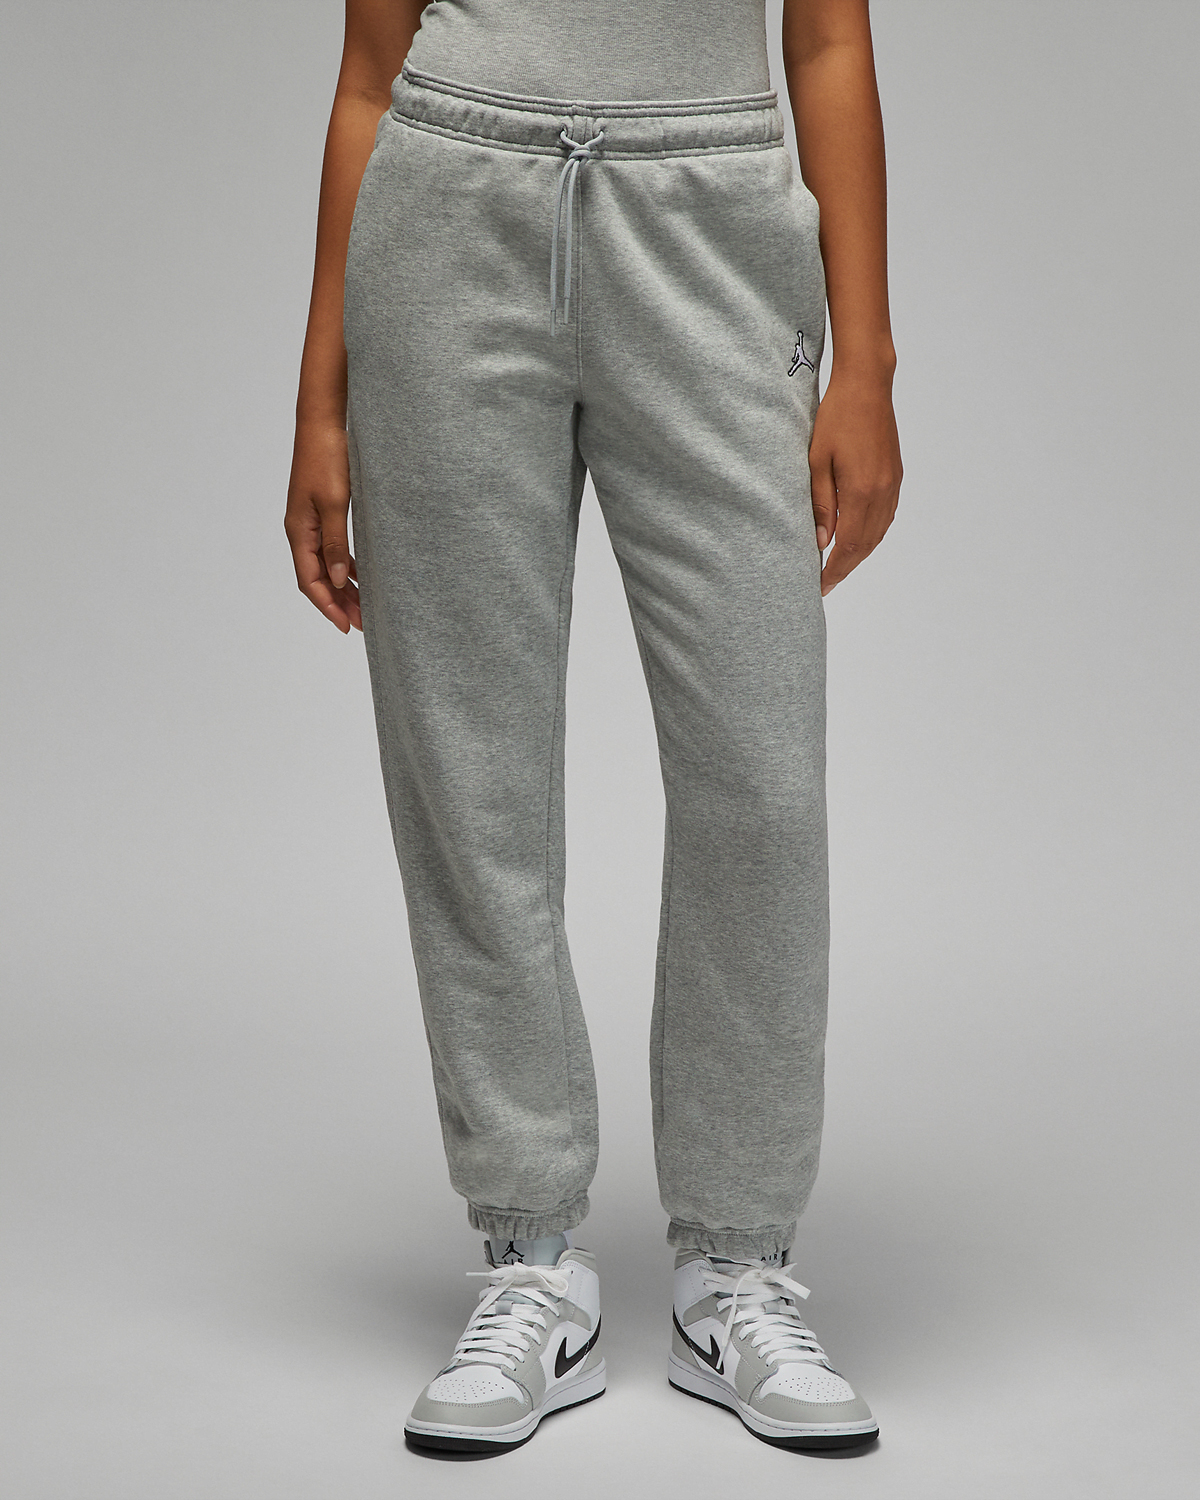 Jordan-Brooklyn-Fleece-Womens-Pants-Grey